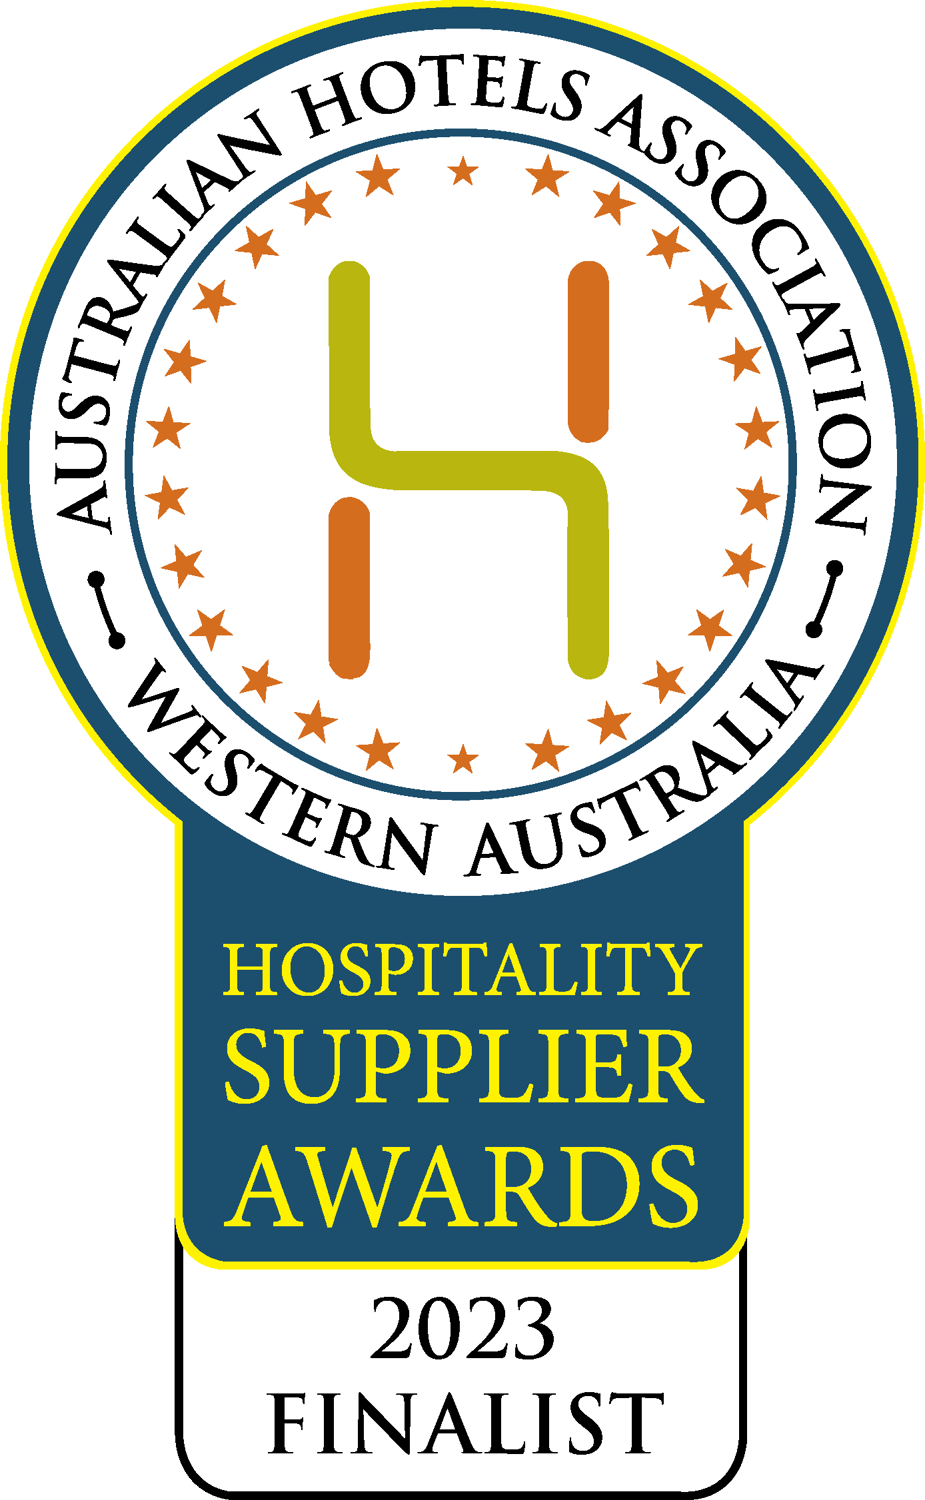 Hosp Supplier Awards 2023 FINALIST